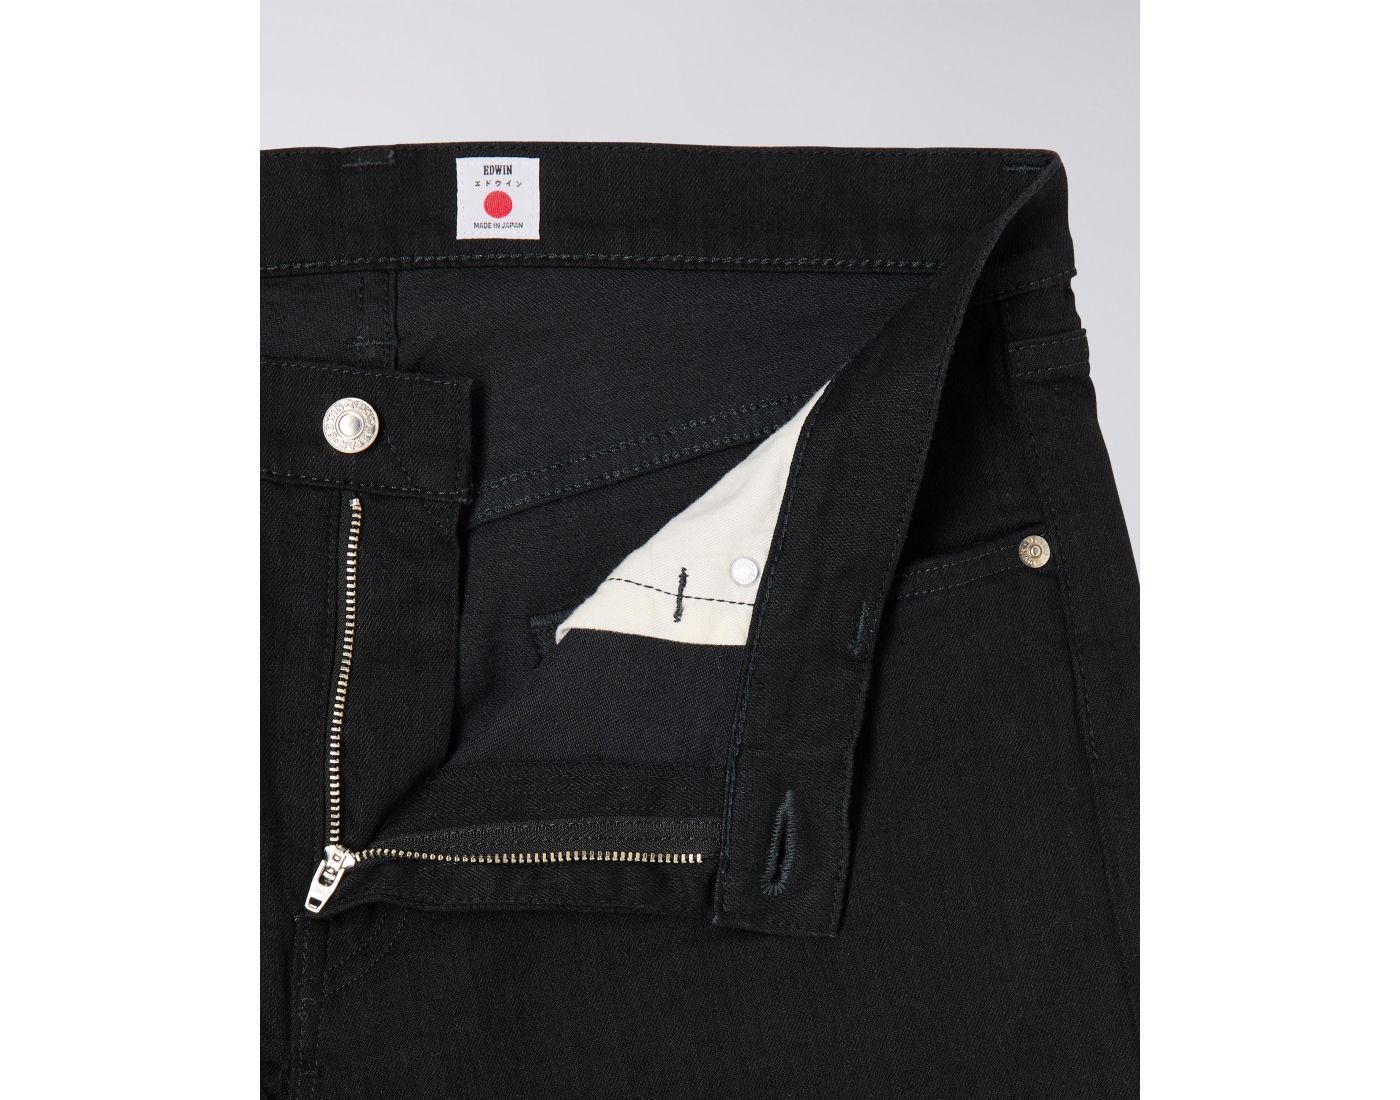 EDWIN Regular Tapered Jeans - Black - Rinsed | EDWIN Europe